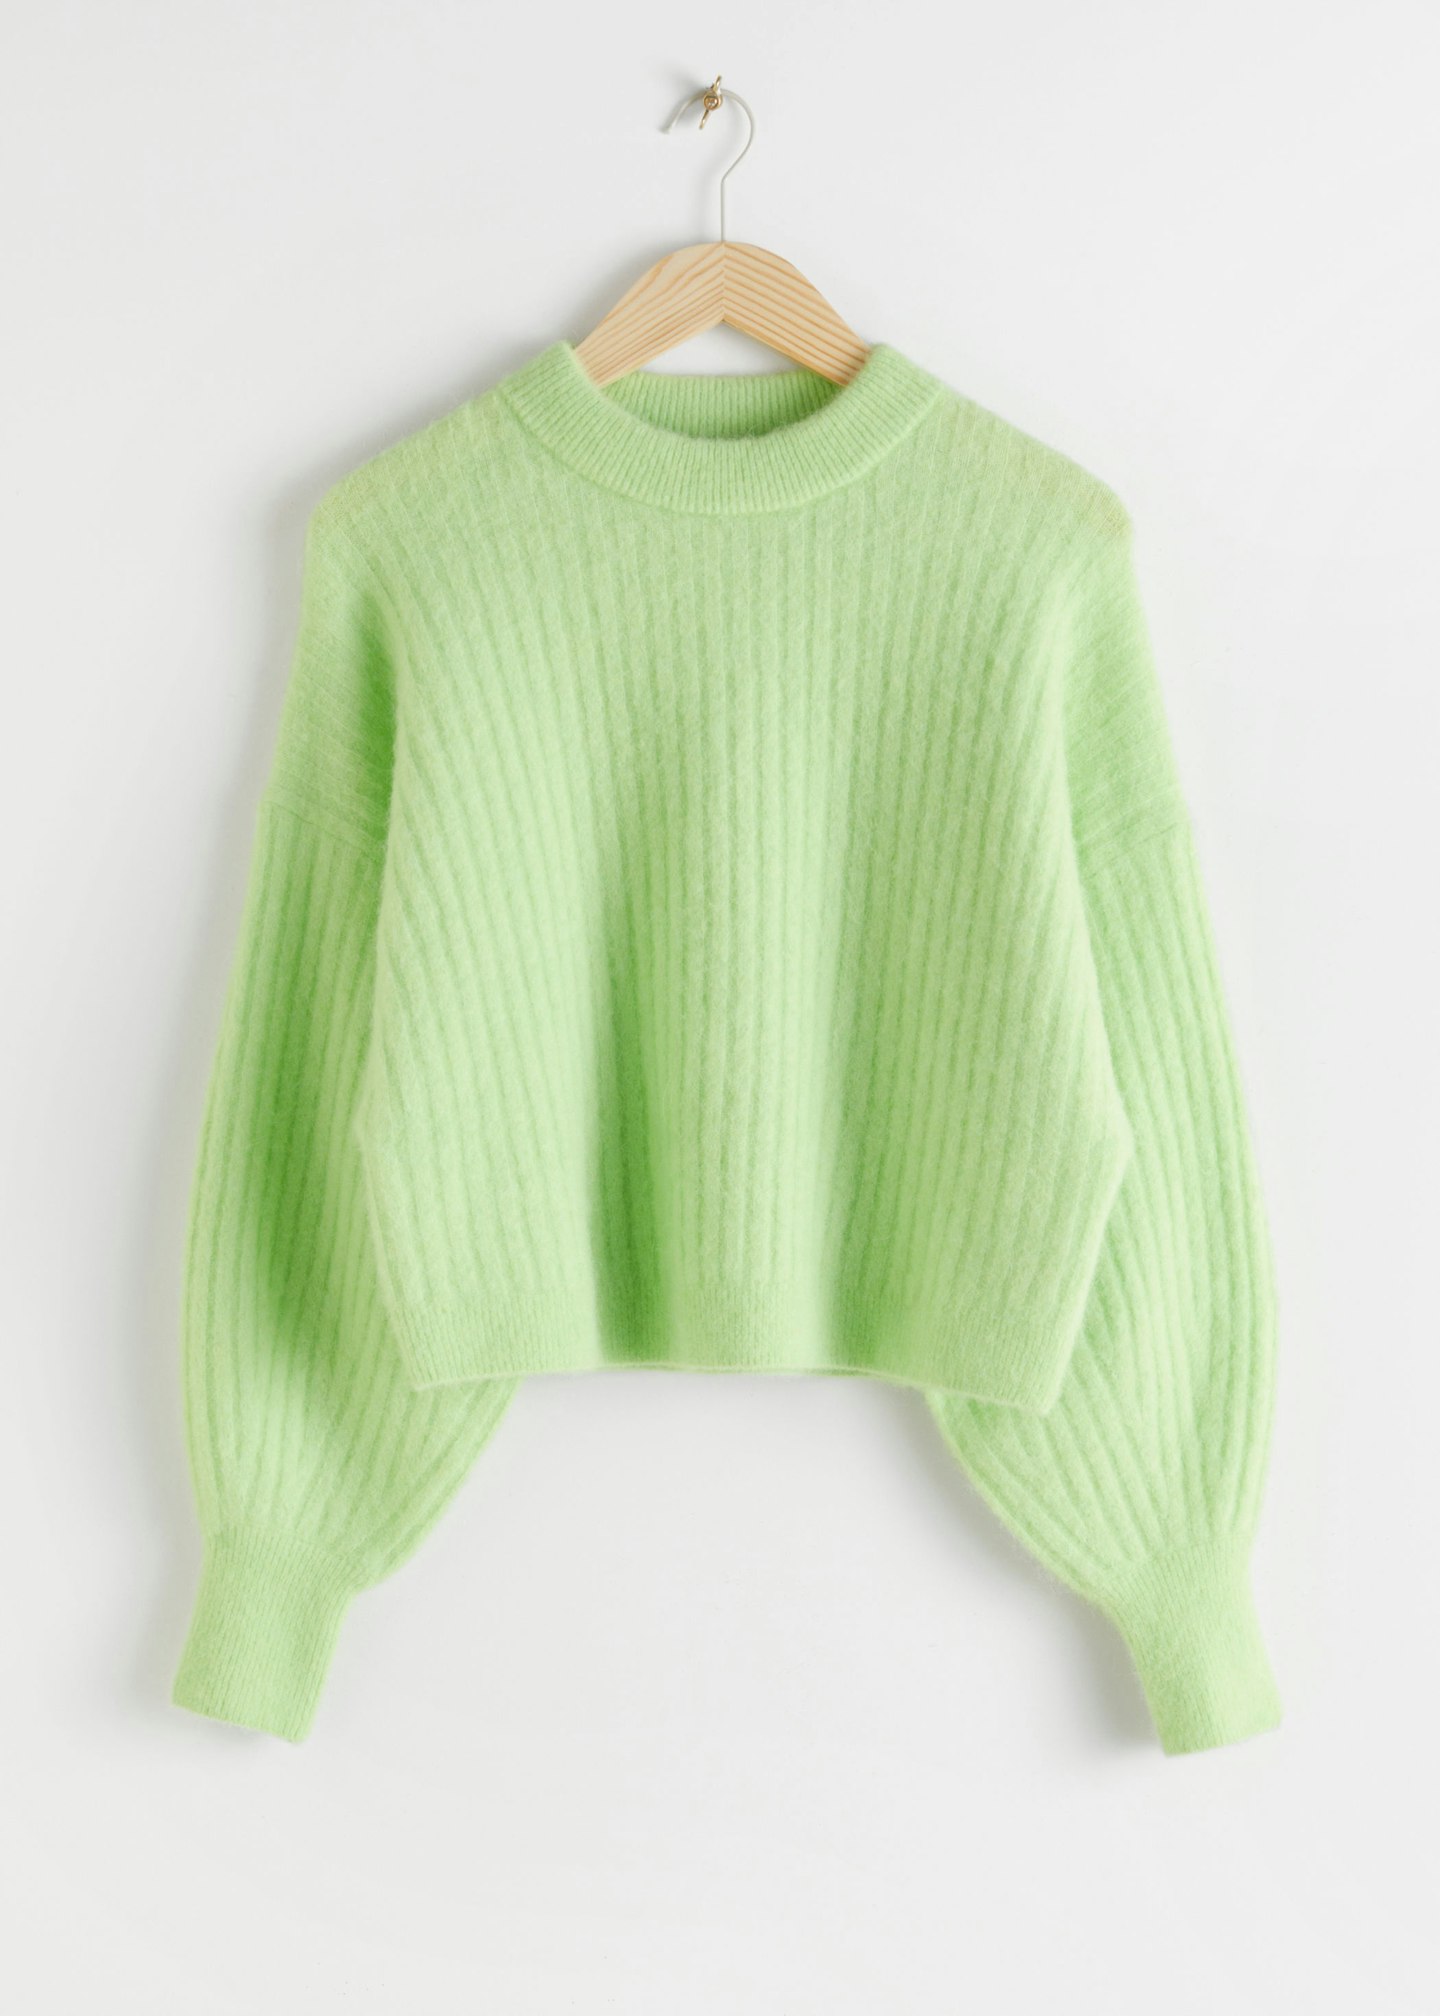 & Other Stories, Alpaca Blend Knit Sweater, £85